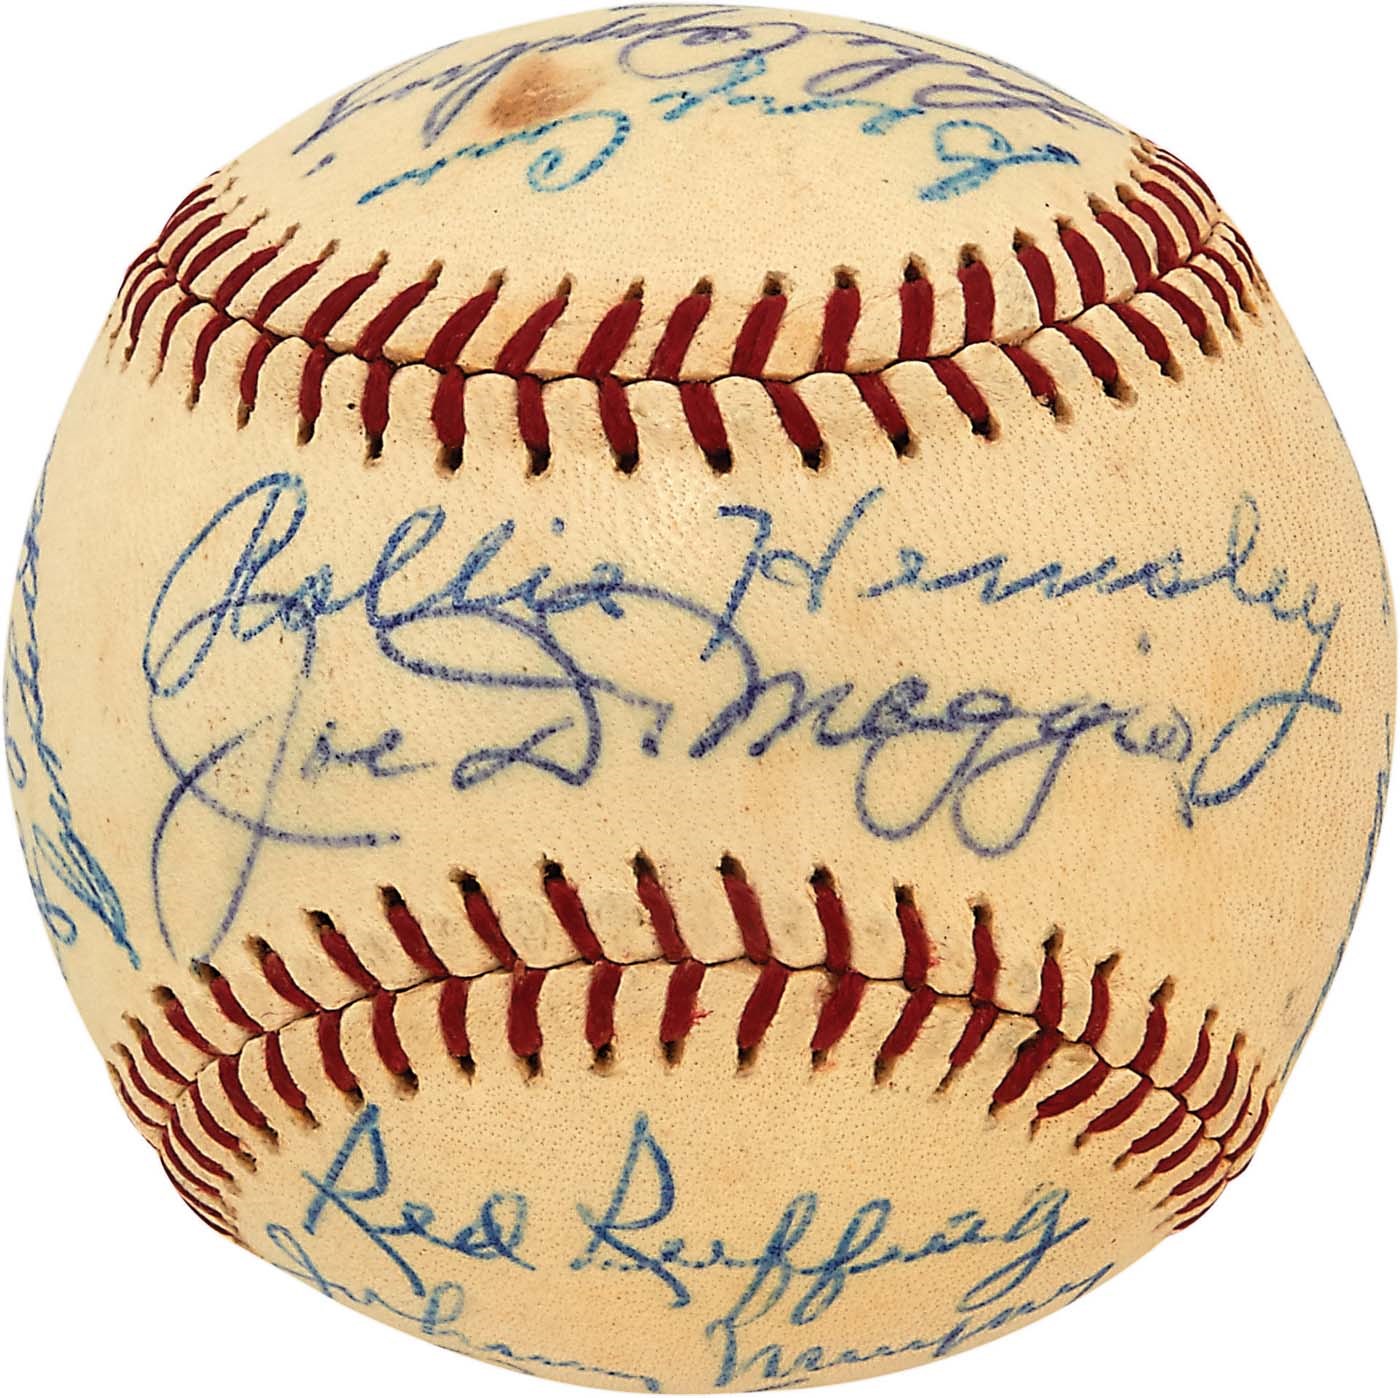 - 1939 All Stars Reunion Team Signed Baseball w/DiMaggio (JSA)